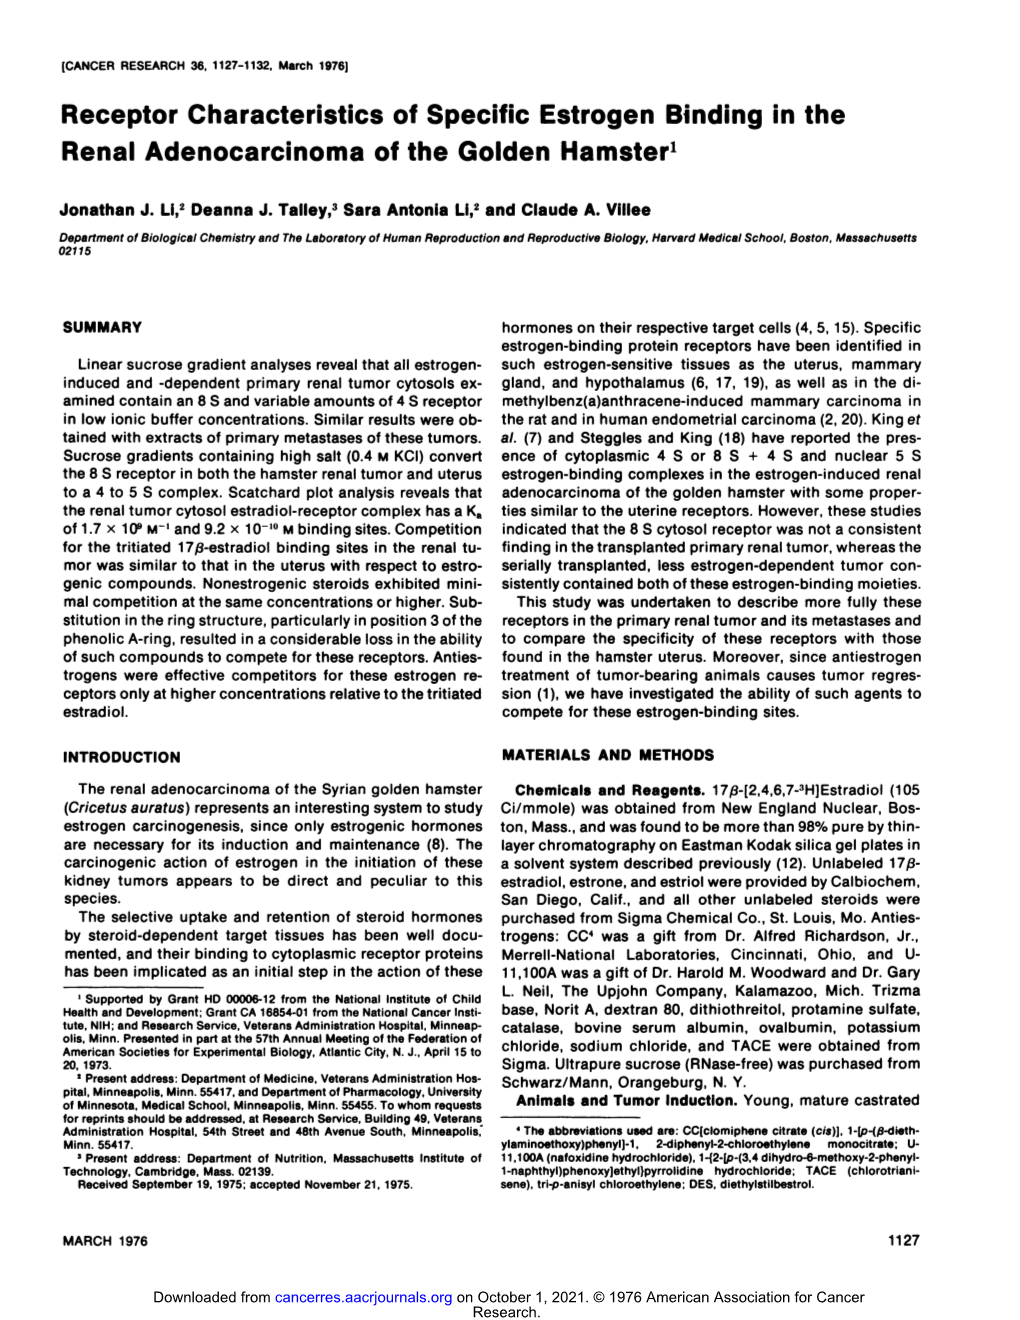 Receptor Characteristics of Specific Estrogen Binding in the Renal Adenocarcinoma of the Golden Hamster'